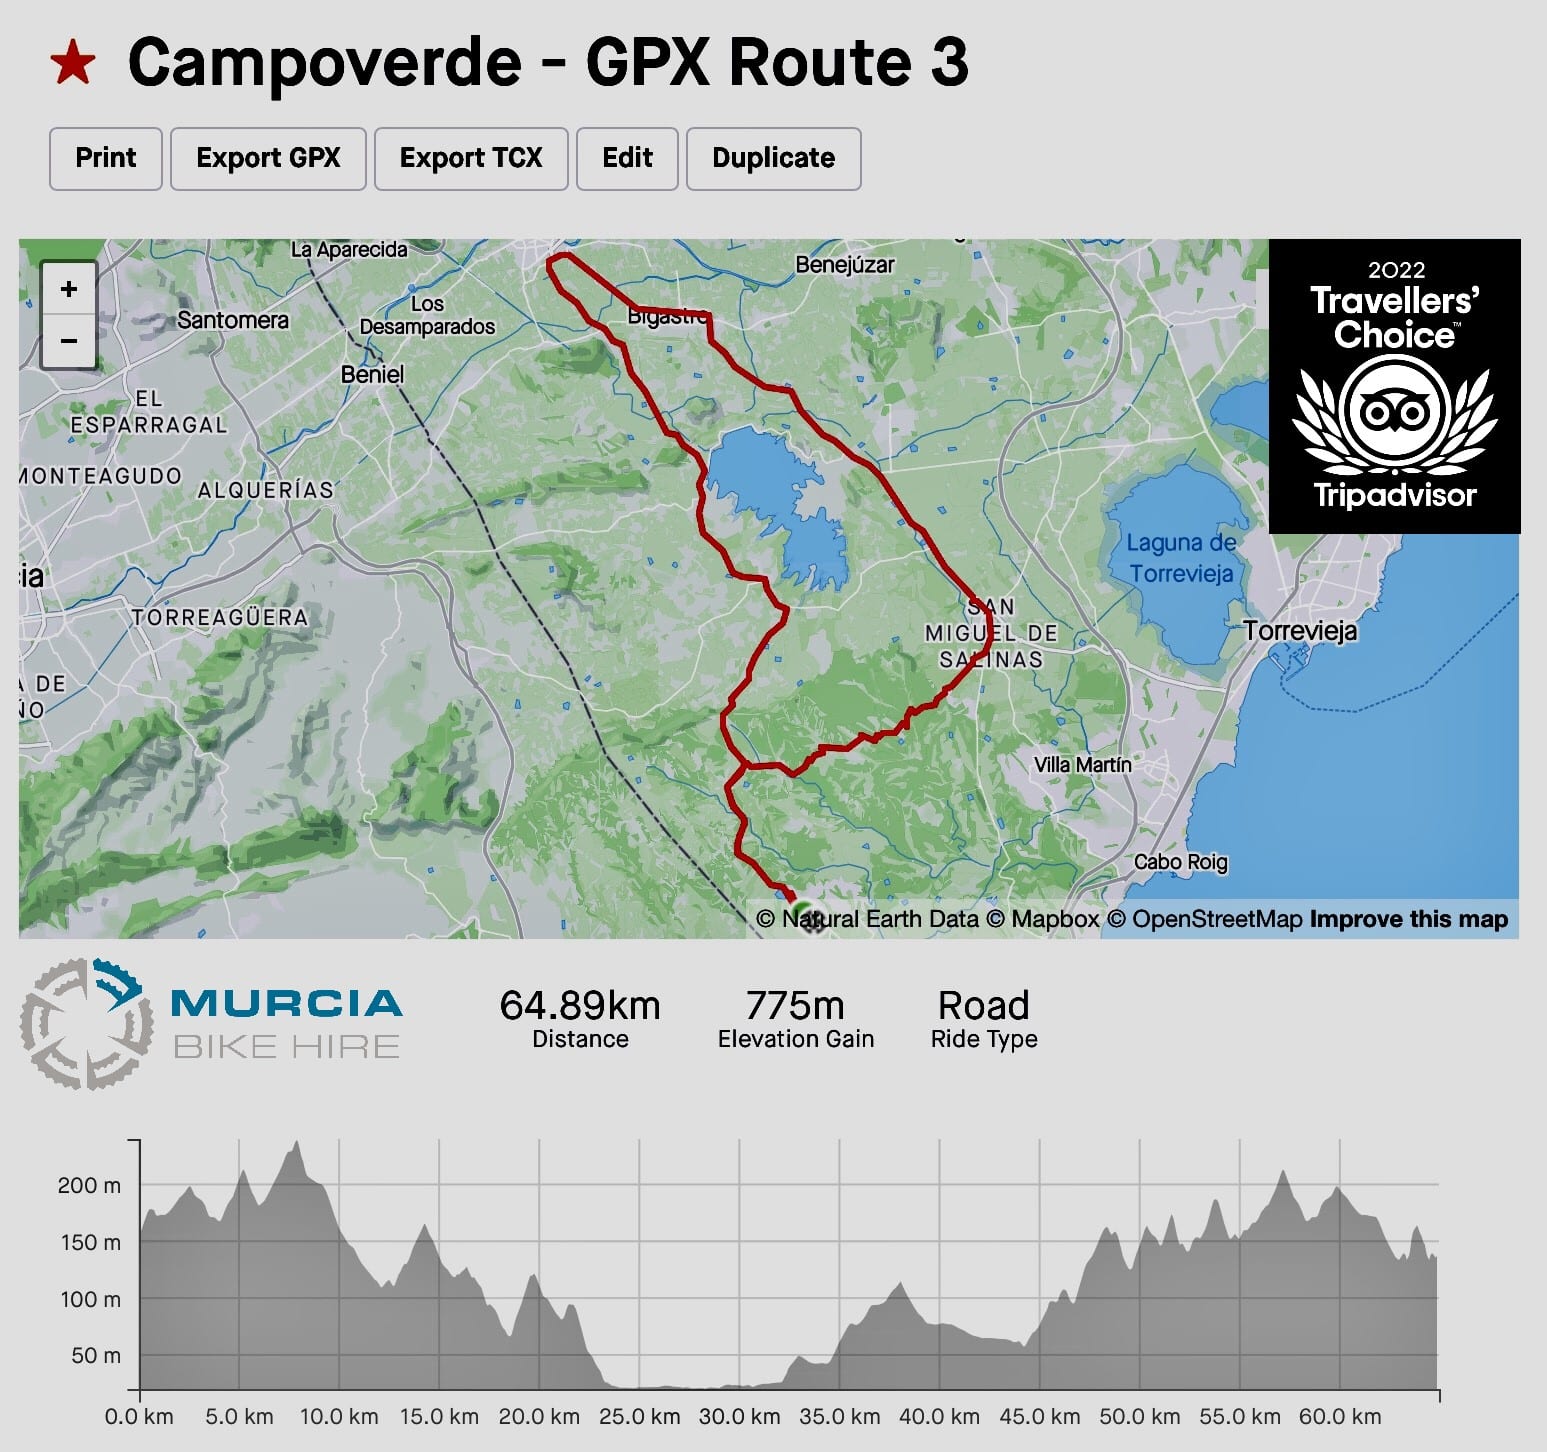 Campoverde - GPX Route 3